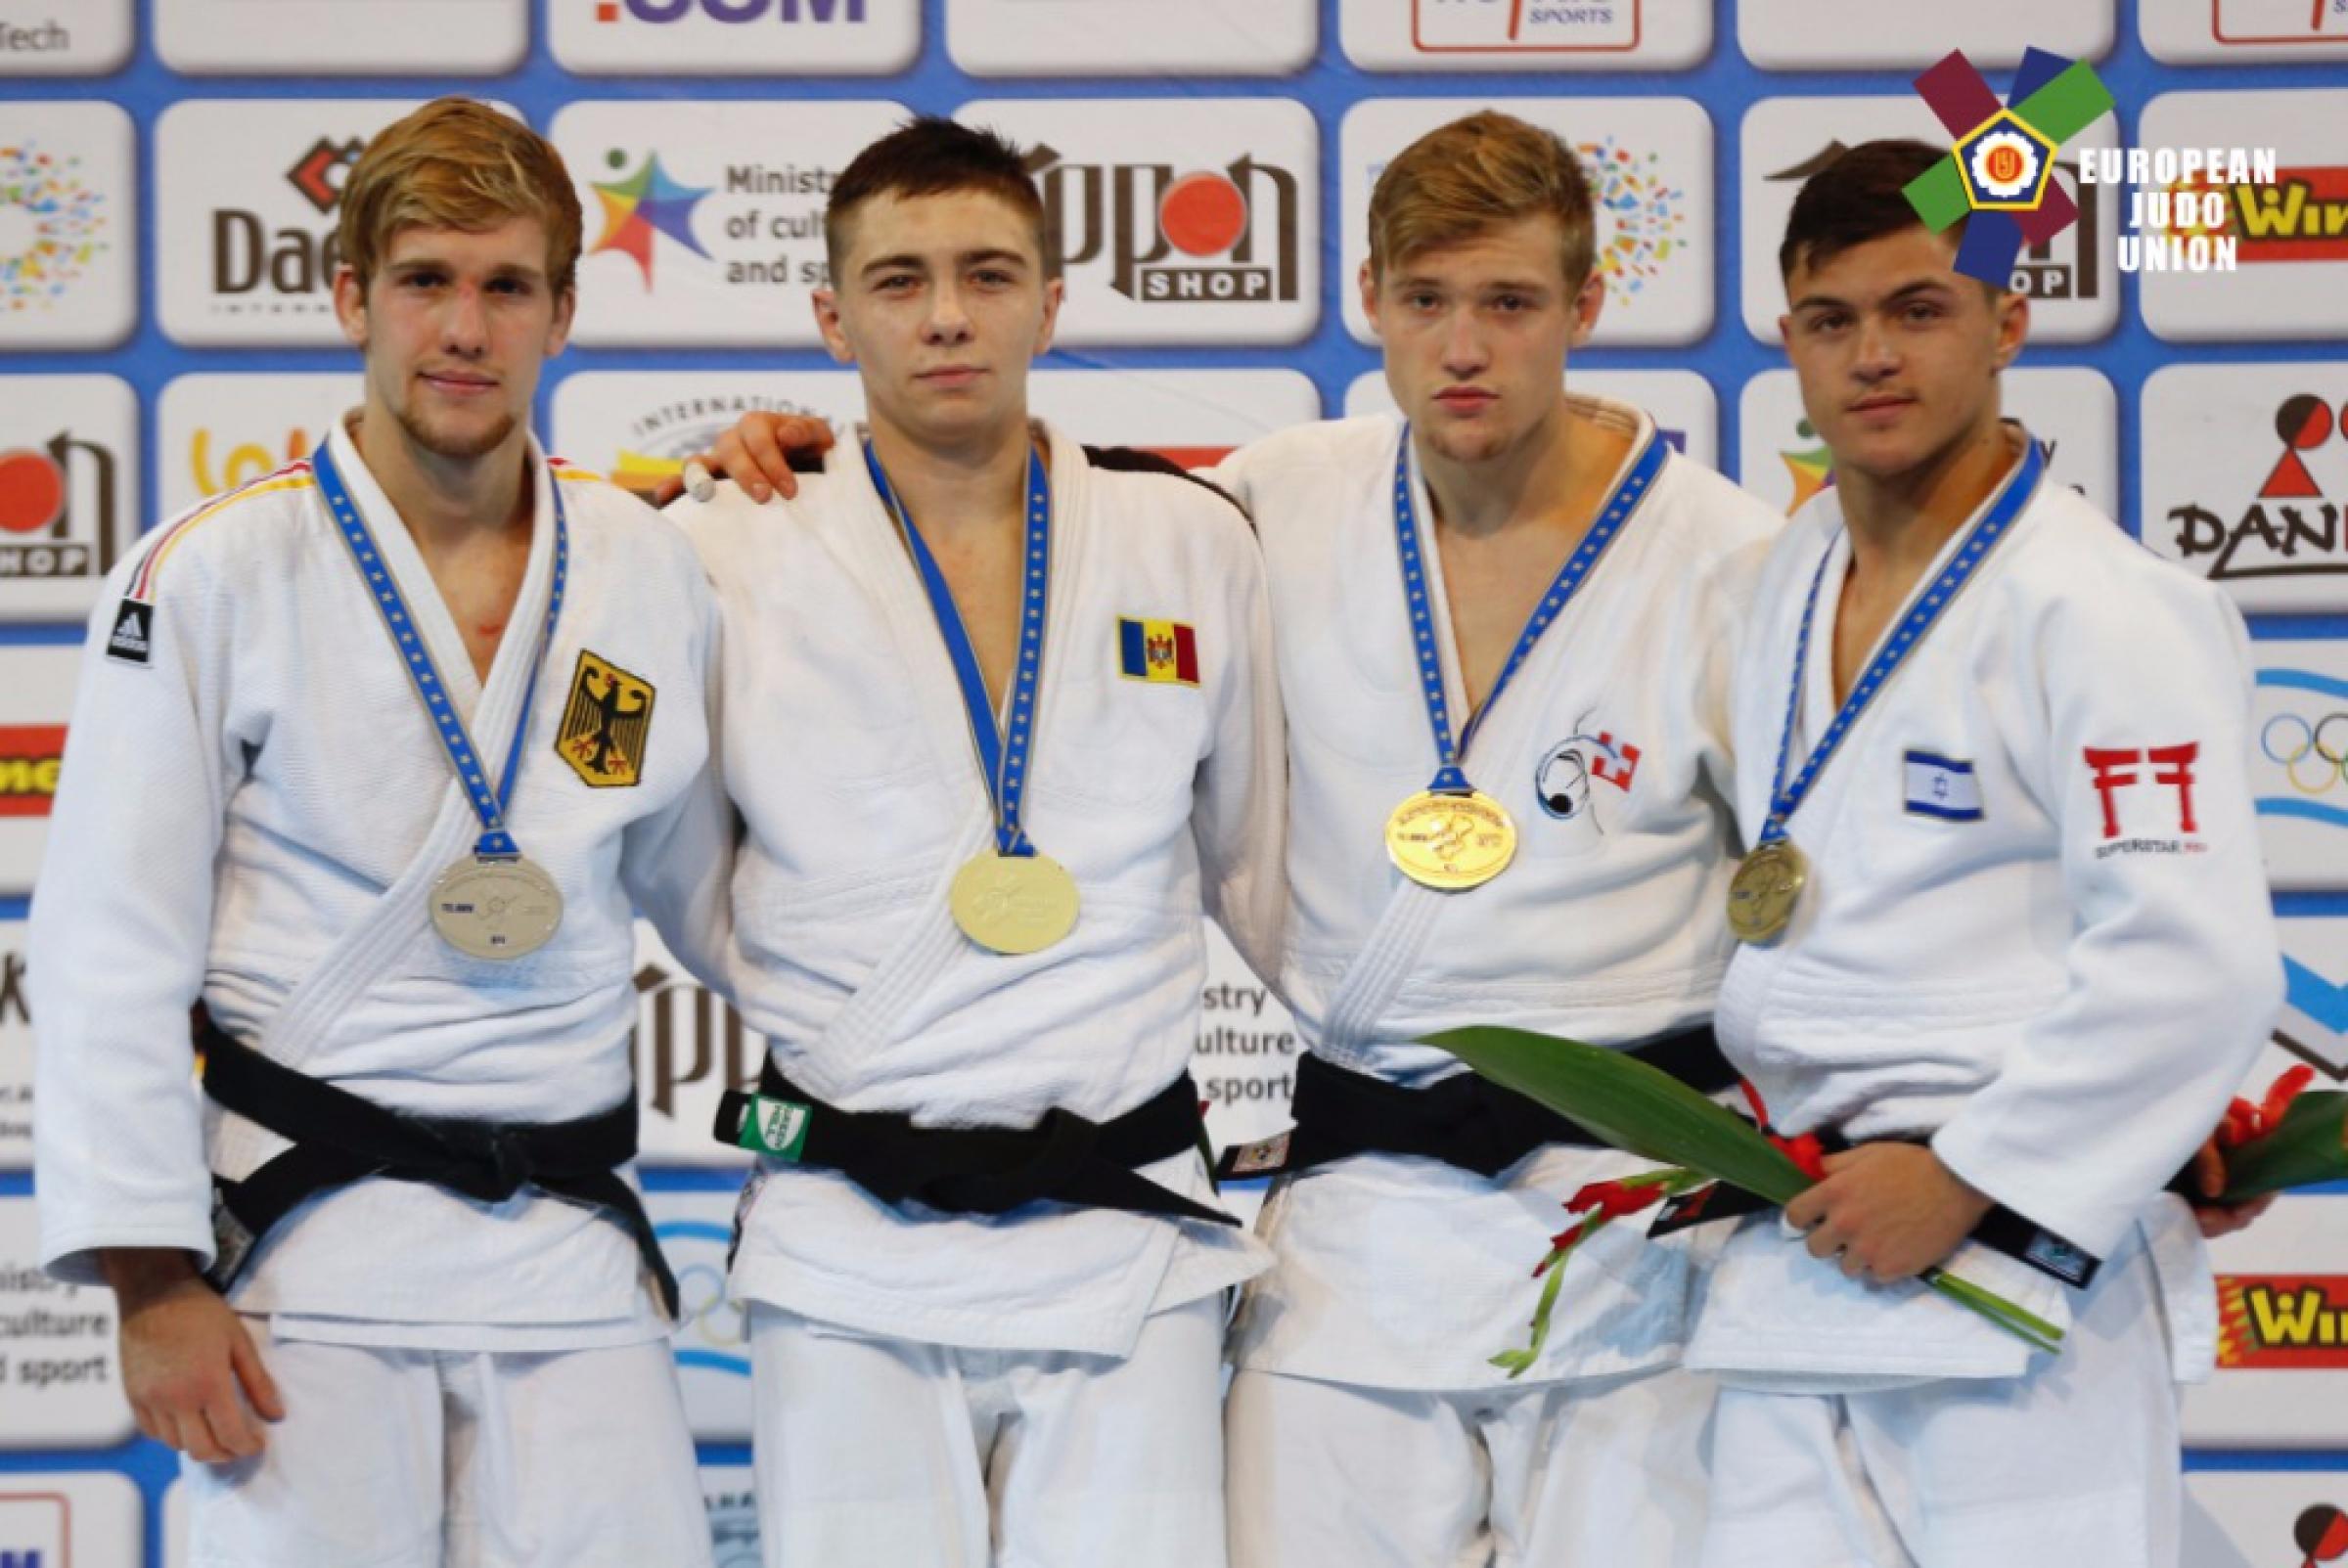 HEYDAROV FIRST TO MAKE IT A TRIPLE FOR AZERBAIJAN - European Judo Union